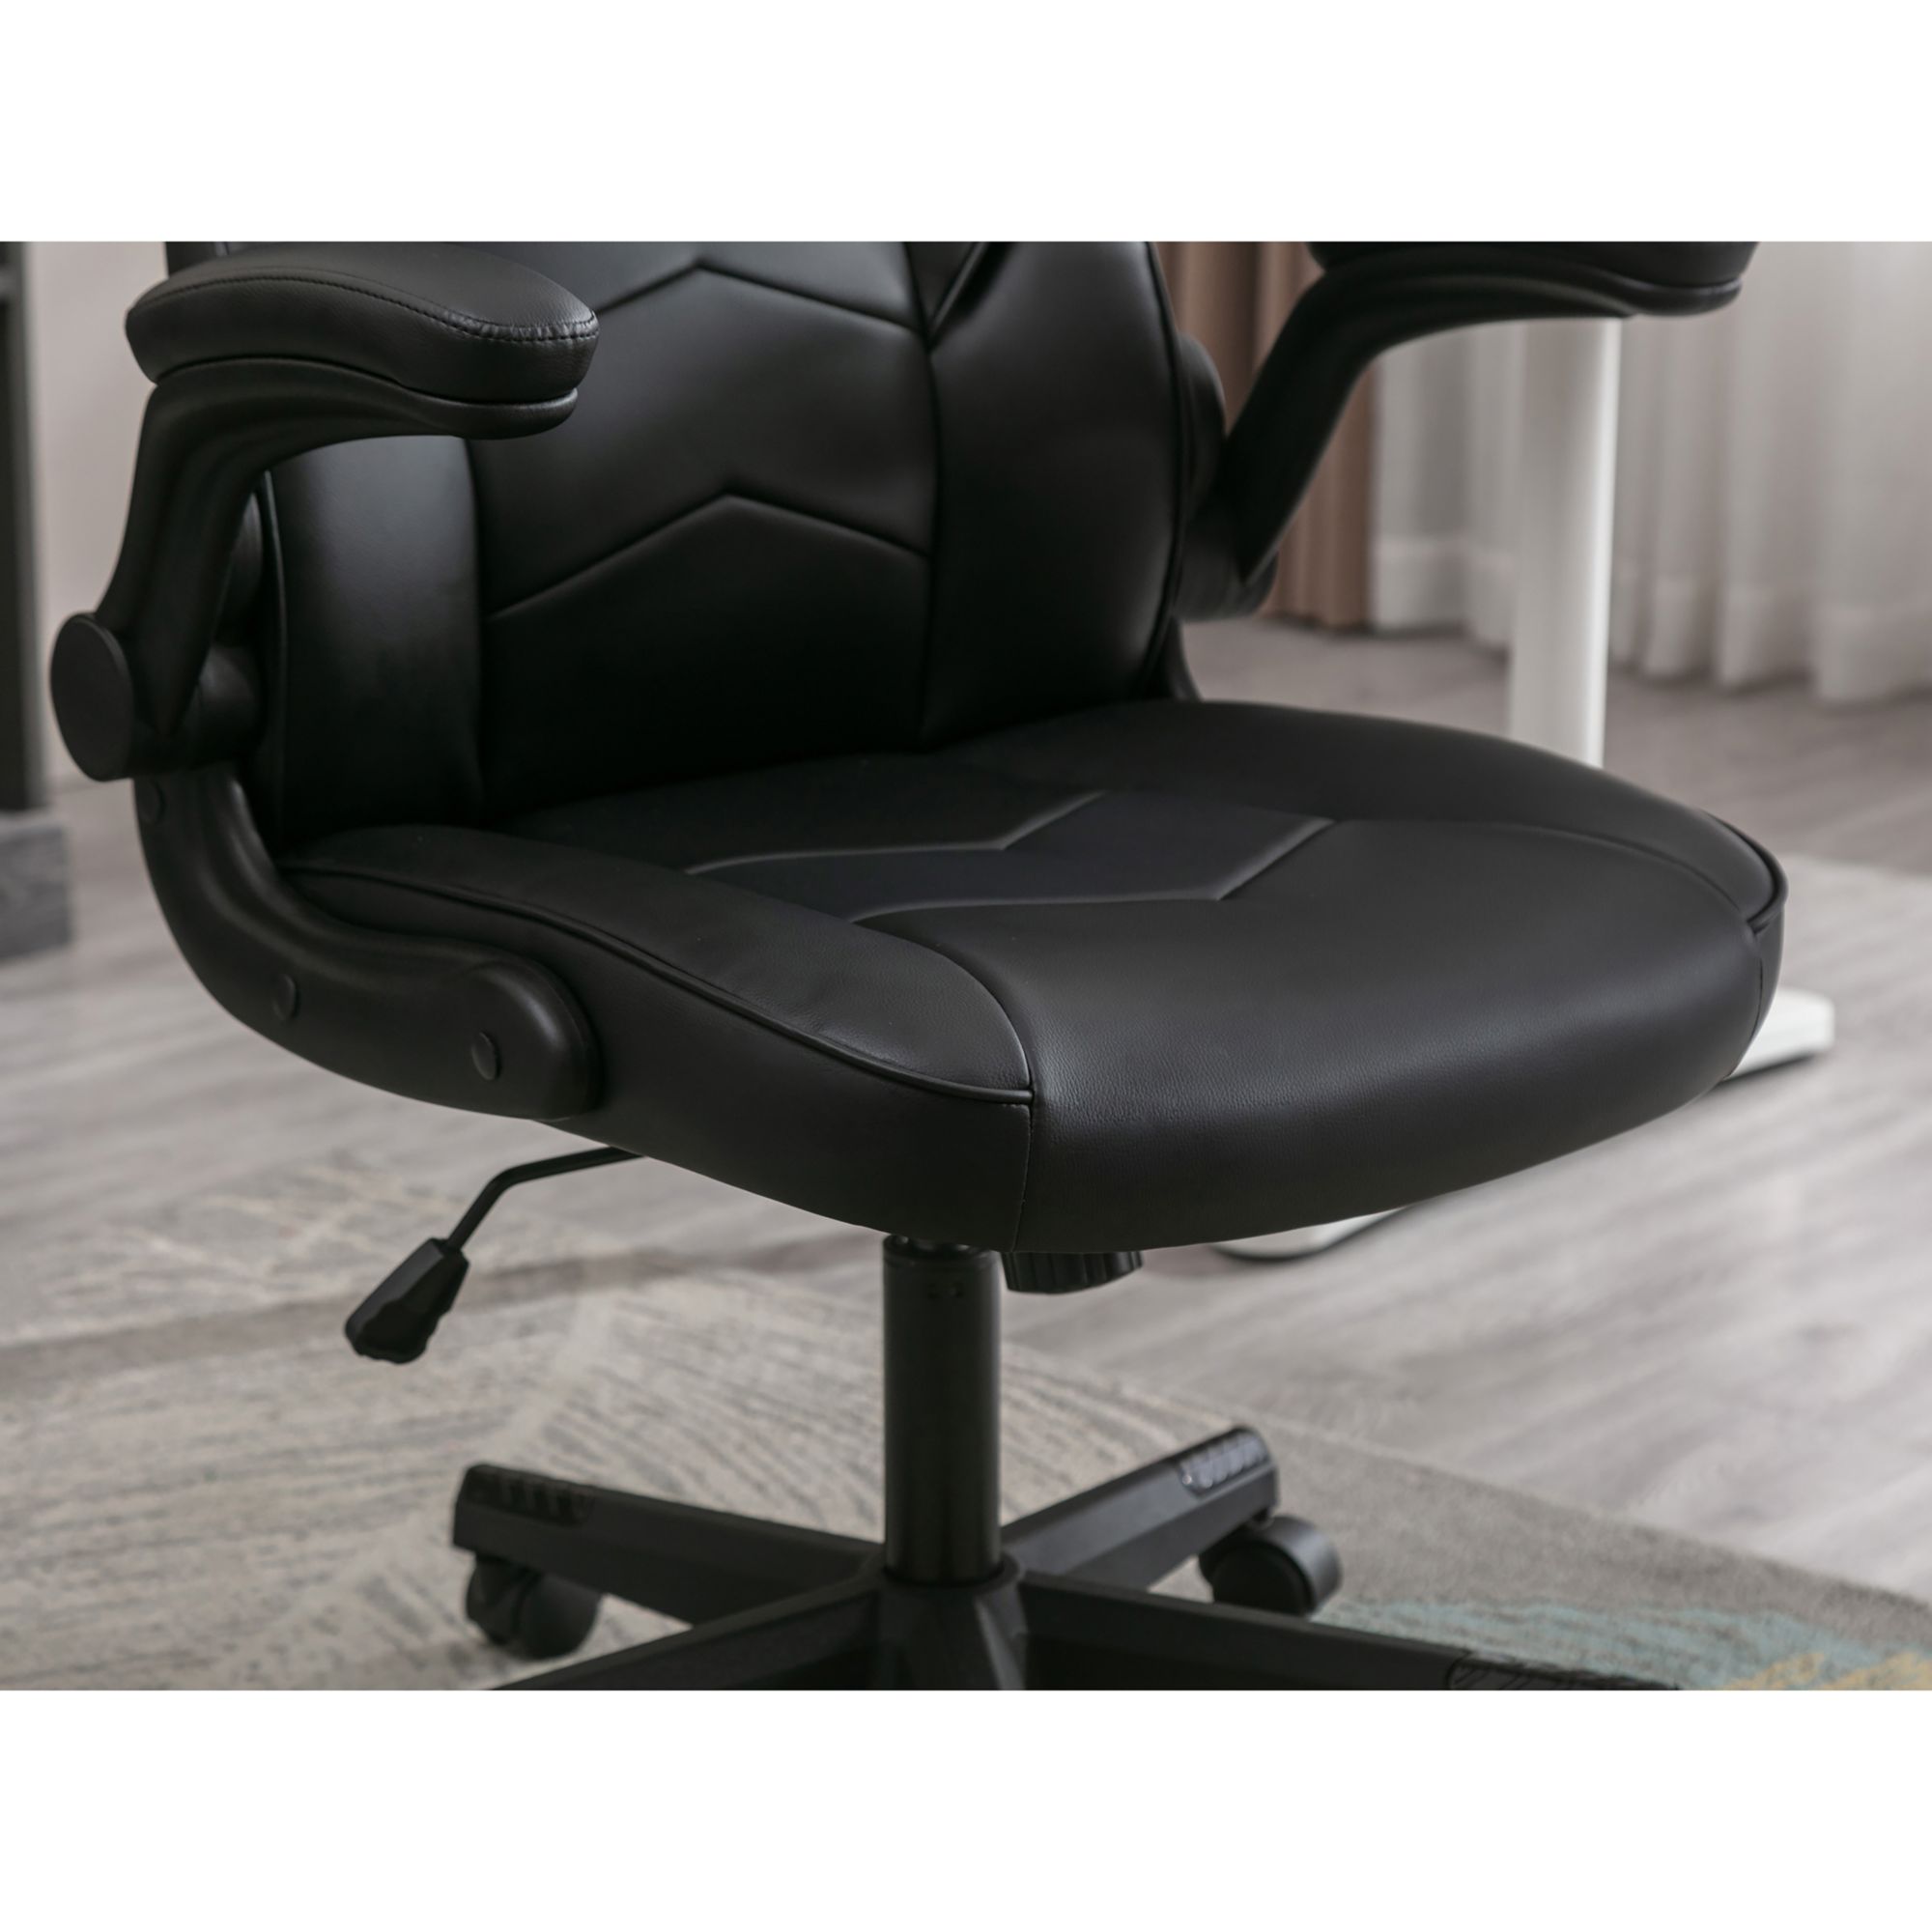 Lifesmart Ergonomic Office and Gaming Chair, Black